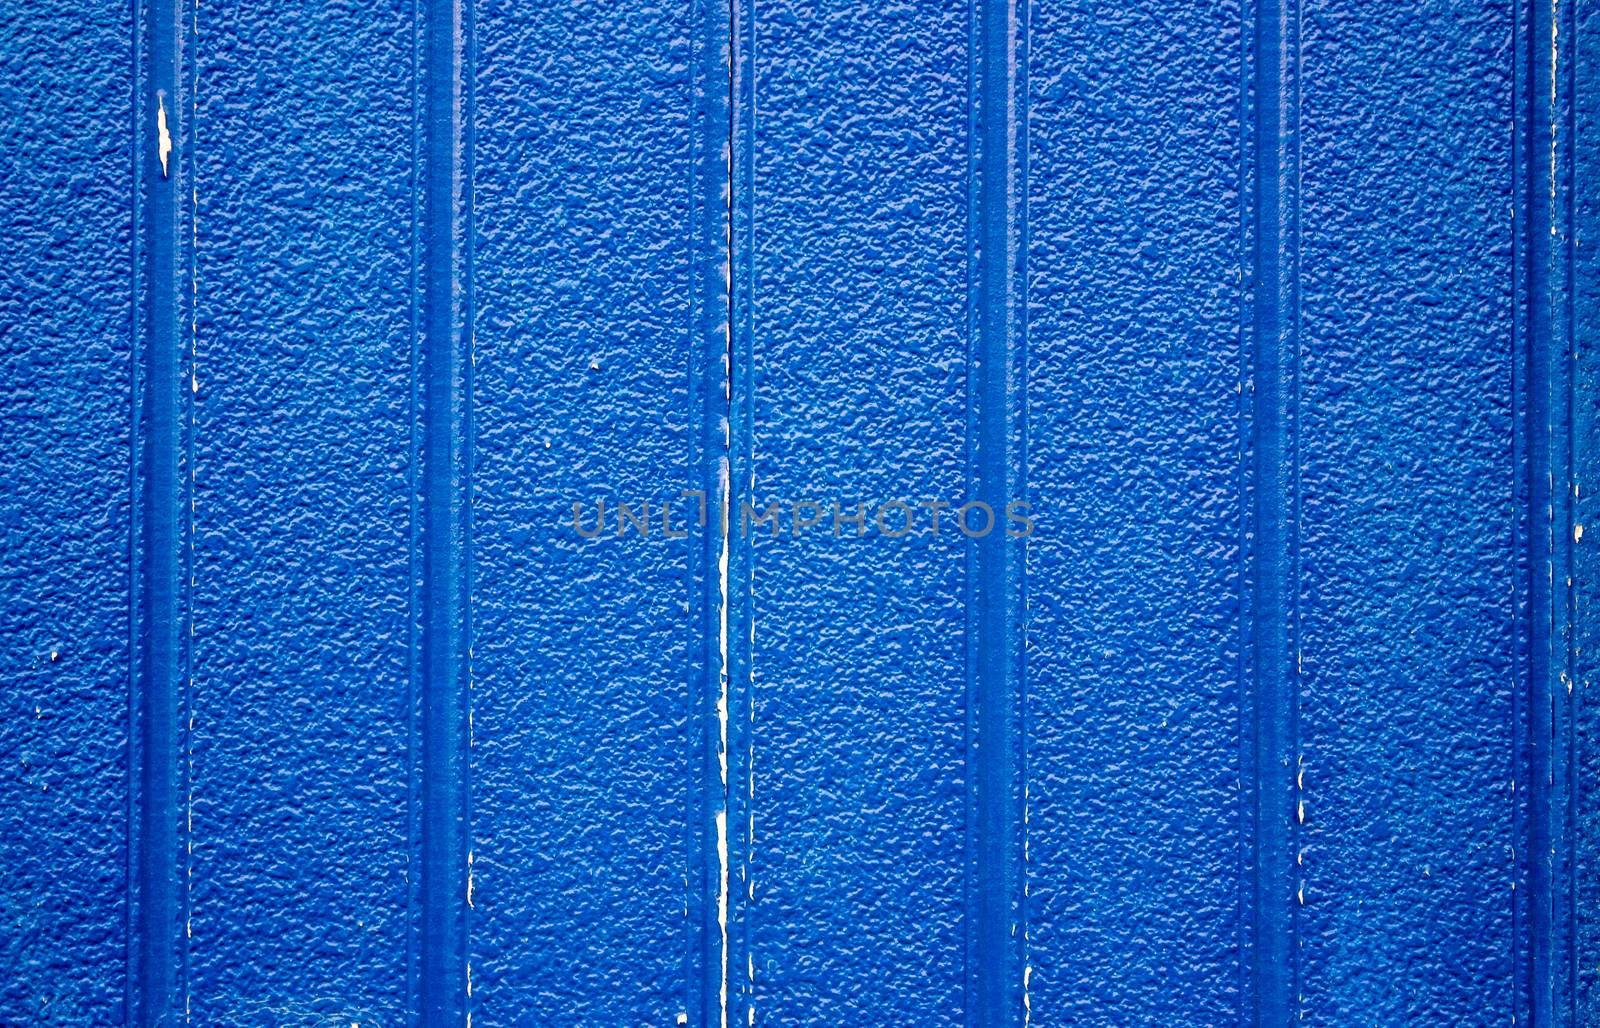 Blue metal siding wall texture.